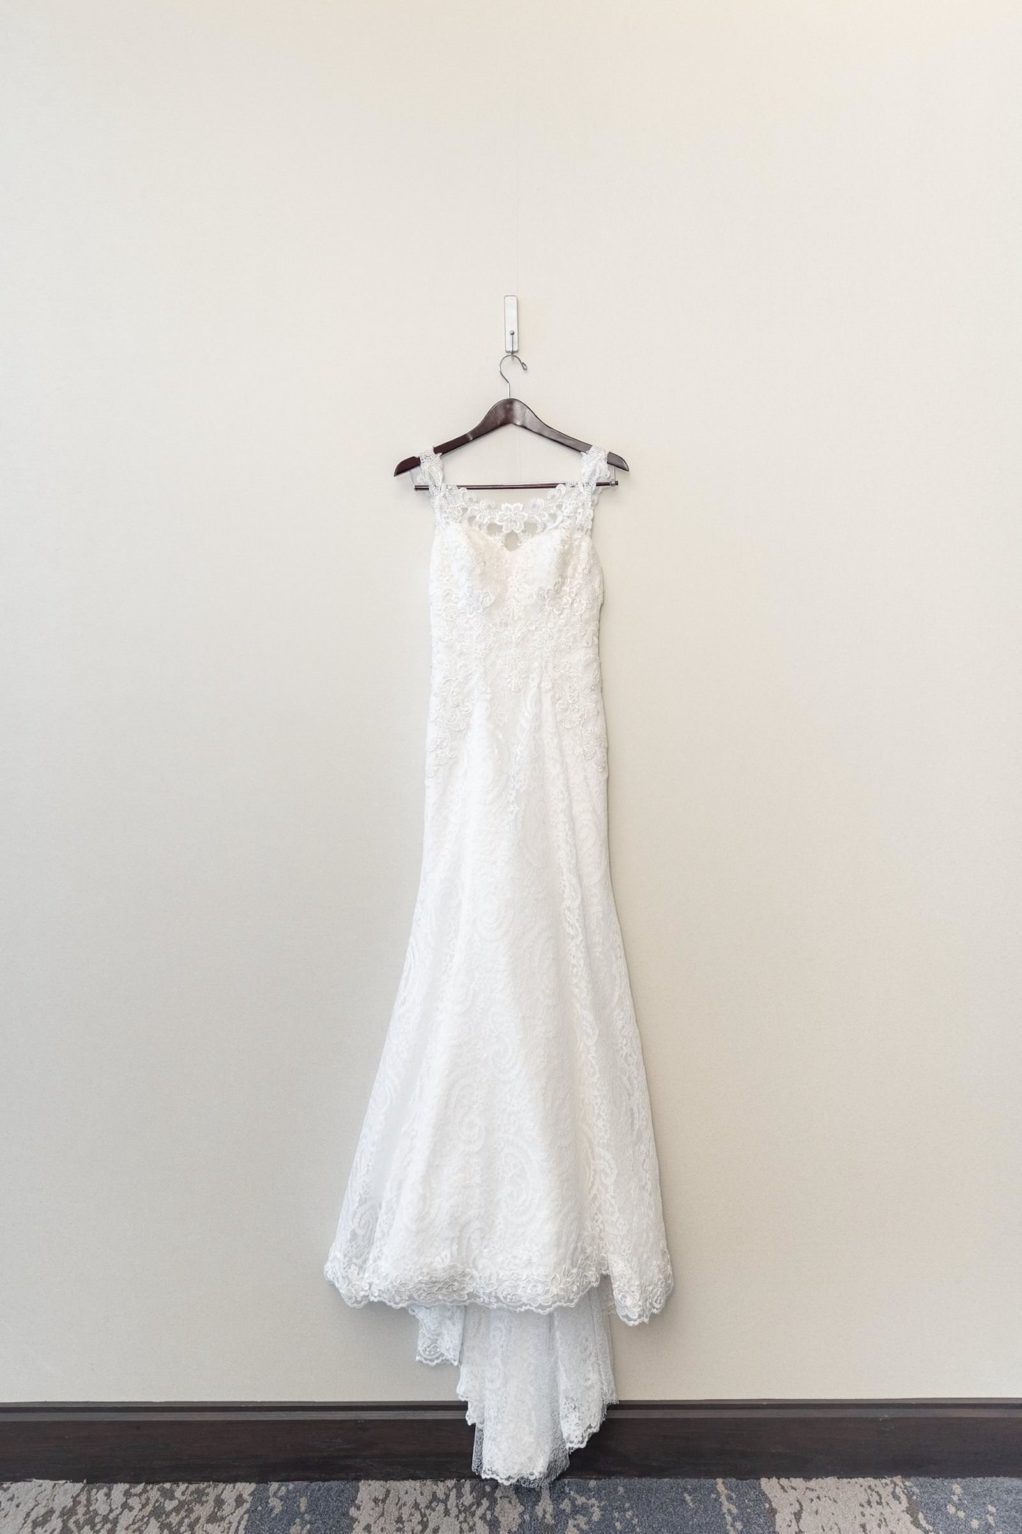 Lace Sweetheart White Wedding Dress on Hanger